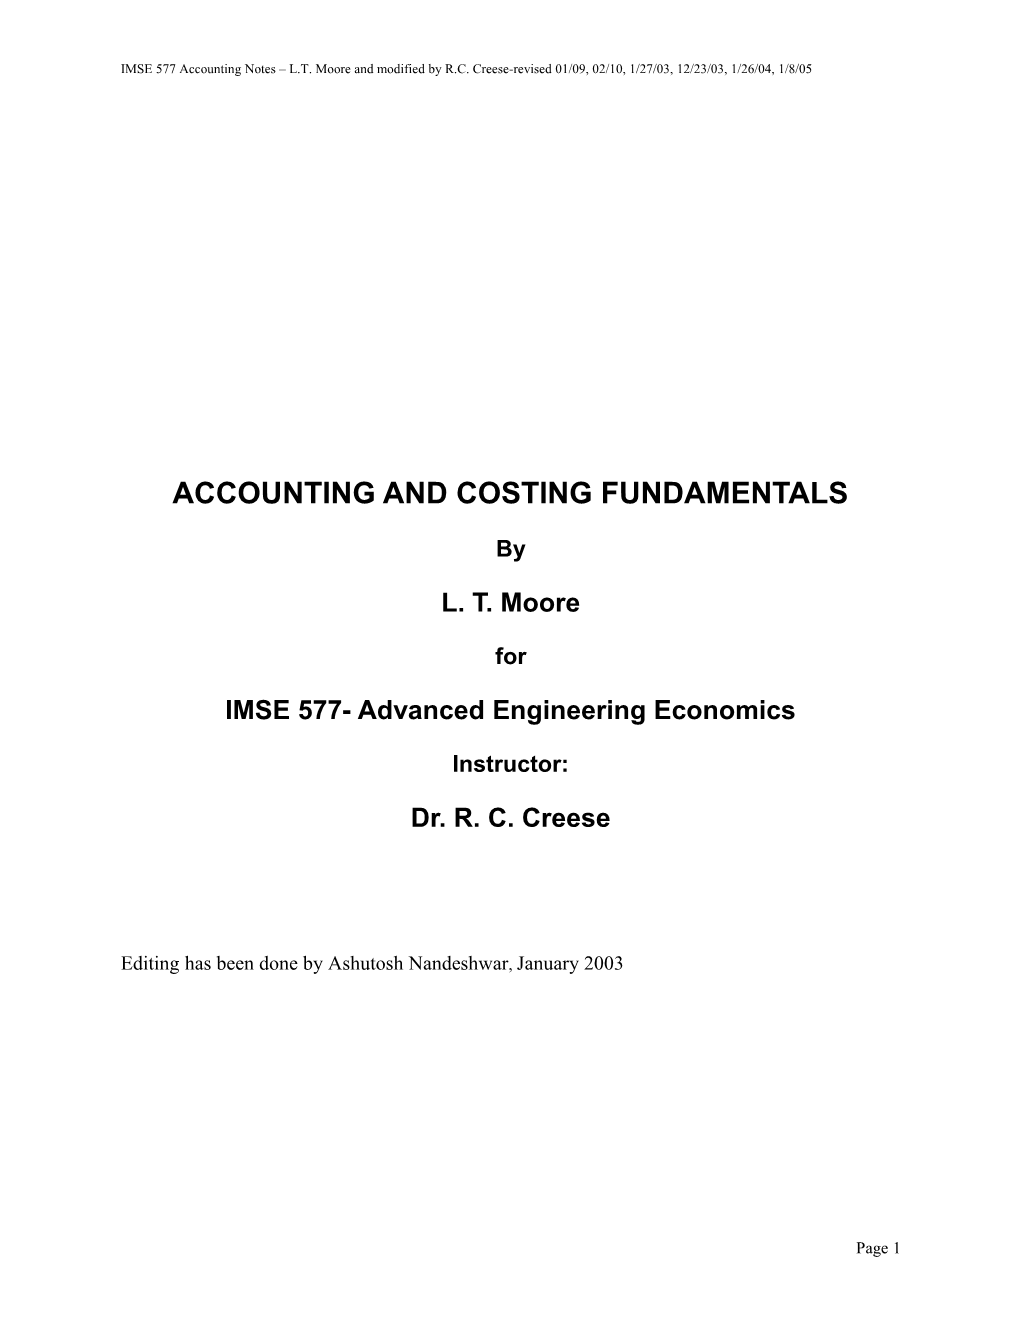 Accounting and Costing Fundamentals